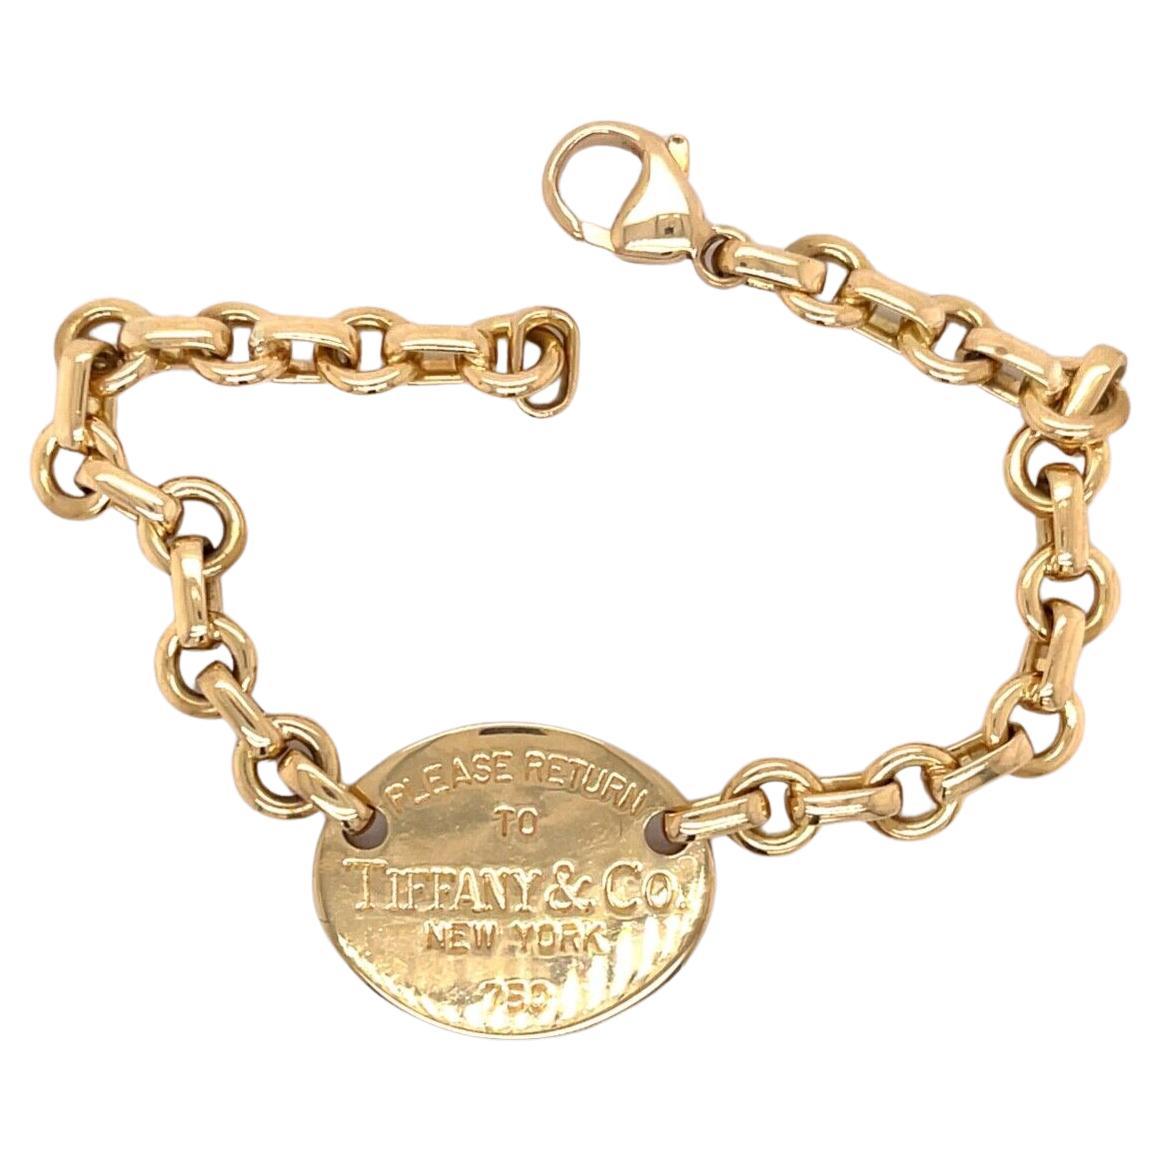 Tiffany & Co. 18k Yellow Gold Return to Tiffany & Co. Round Tag Bracelet